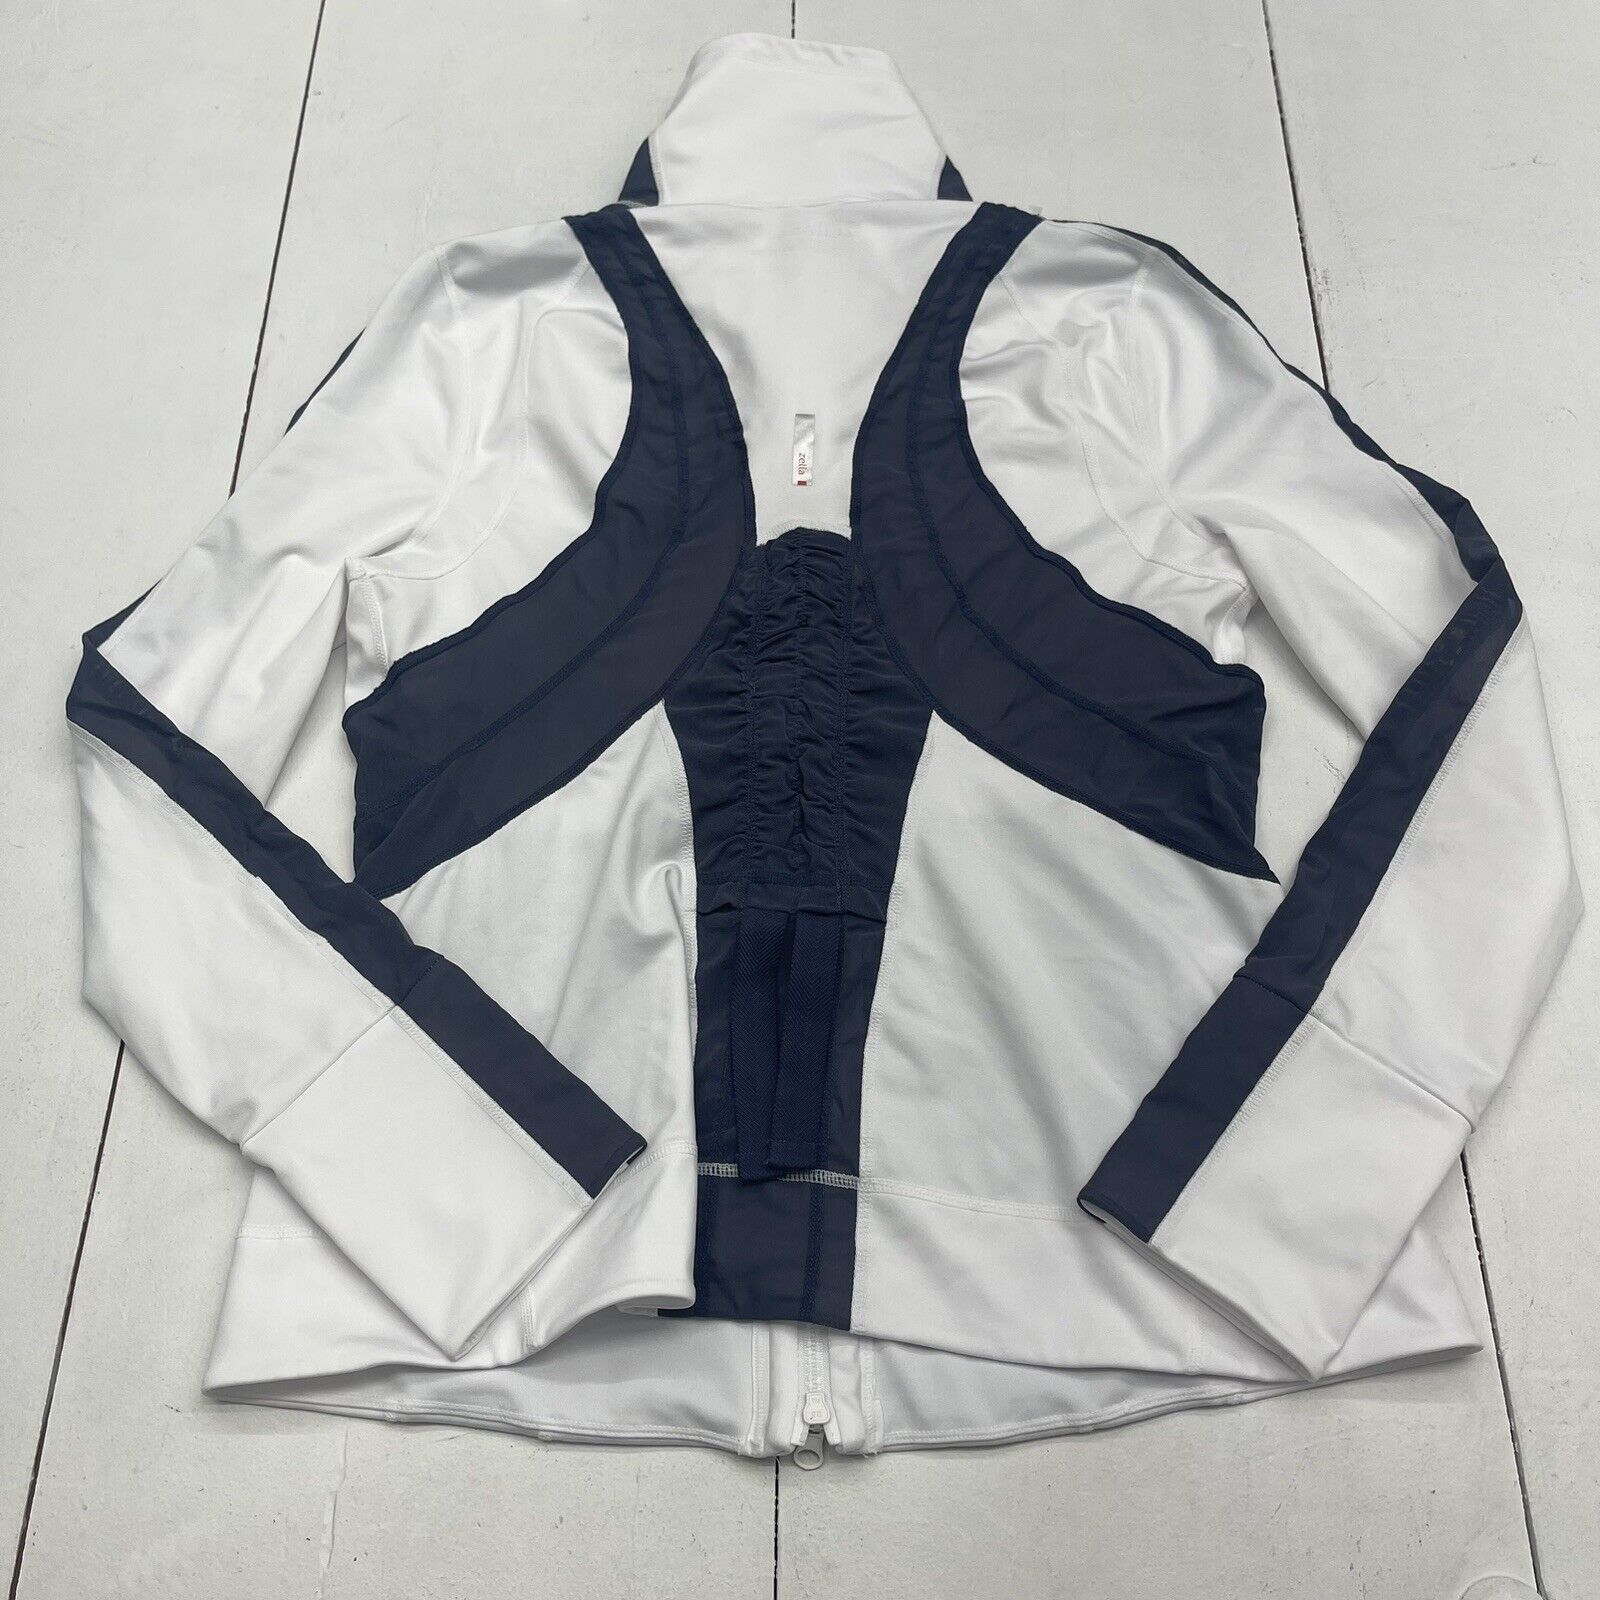 Zella White Gray Mesh Long Sleeve Zip Up Jacket Women's Size XL